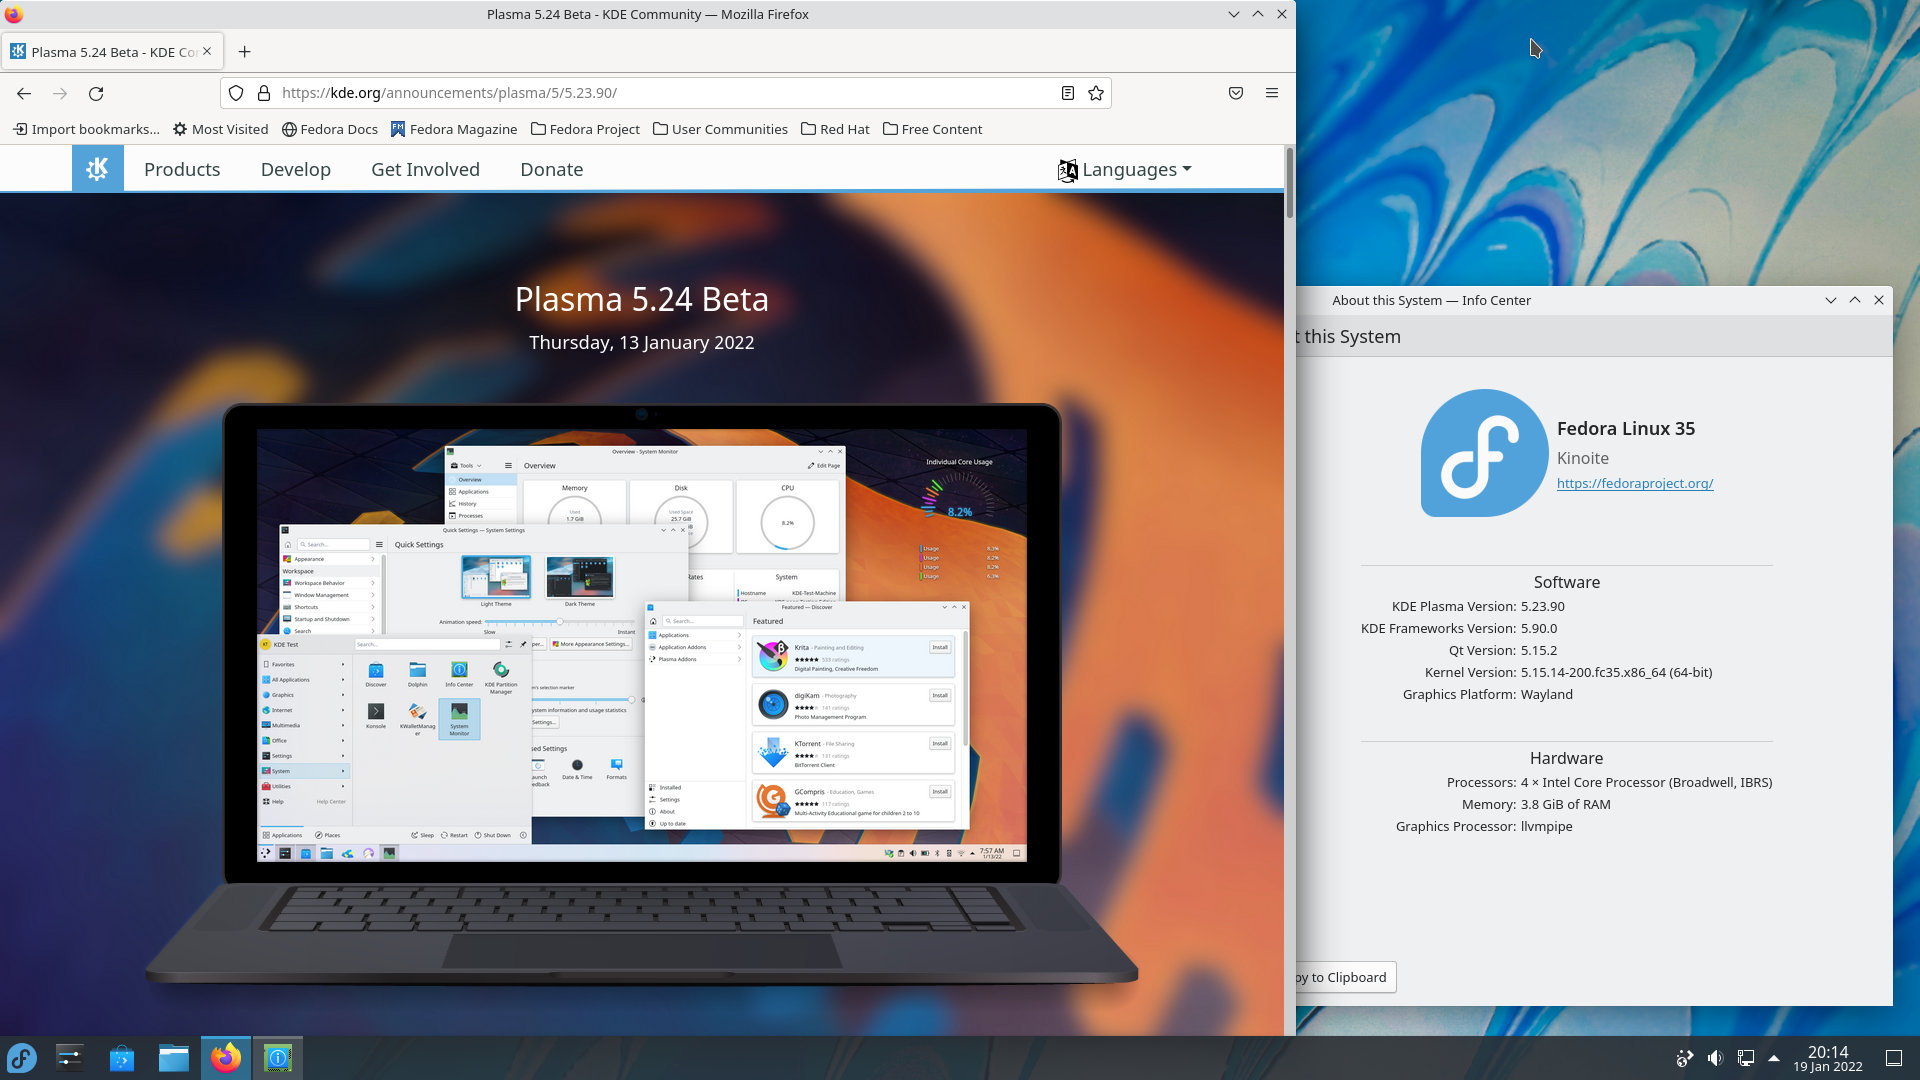 Fedora Kinoite 35 with the KDE Plasma 5.24 Beta